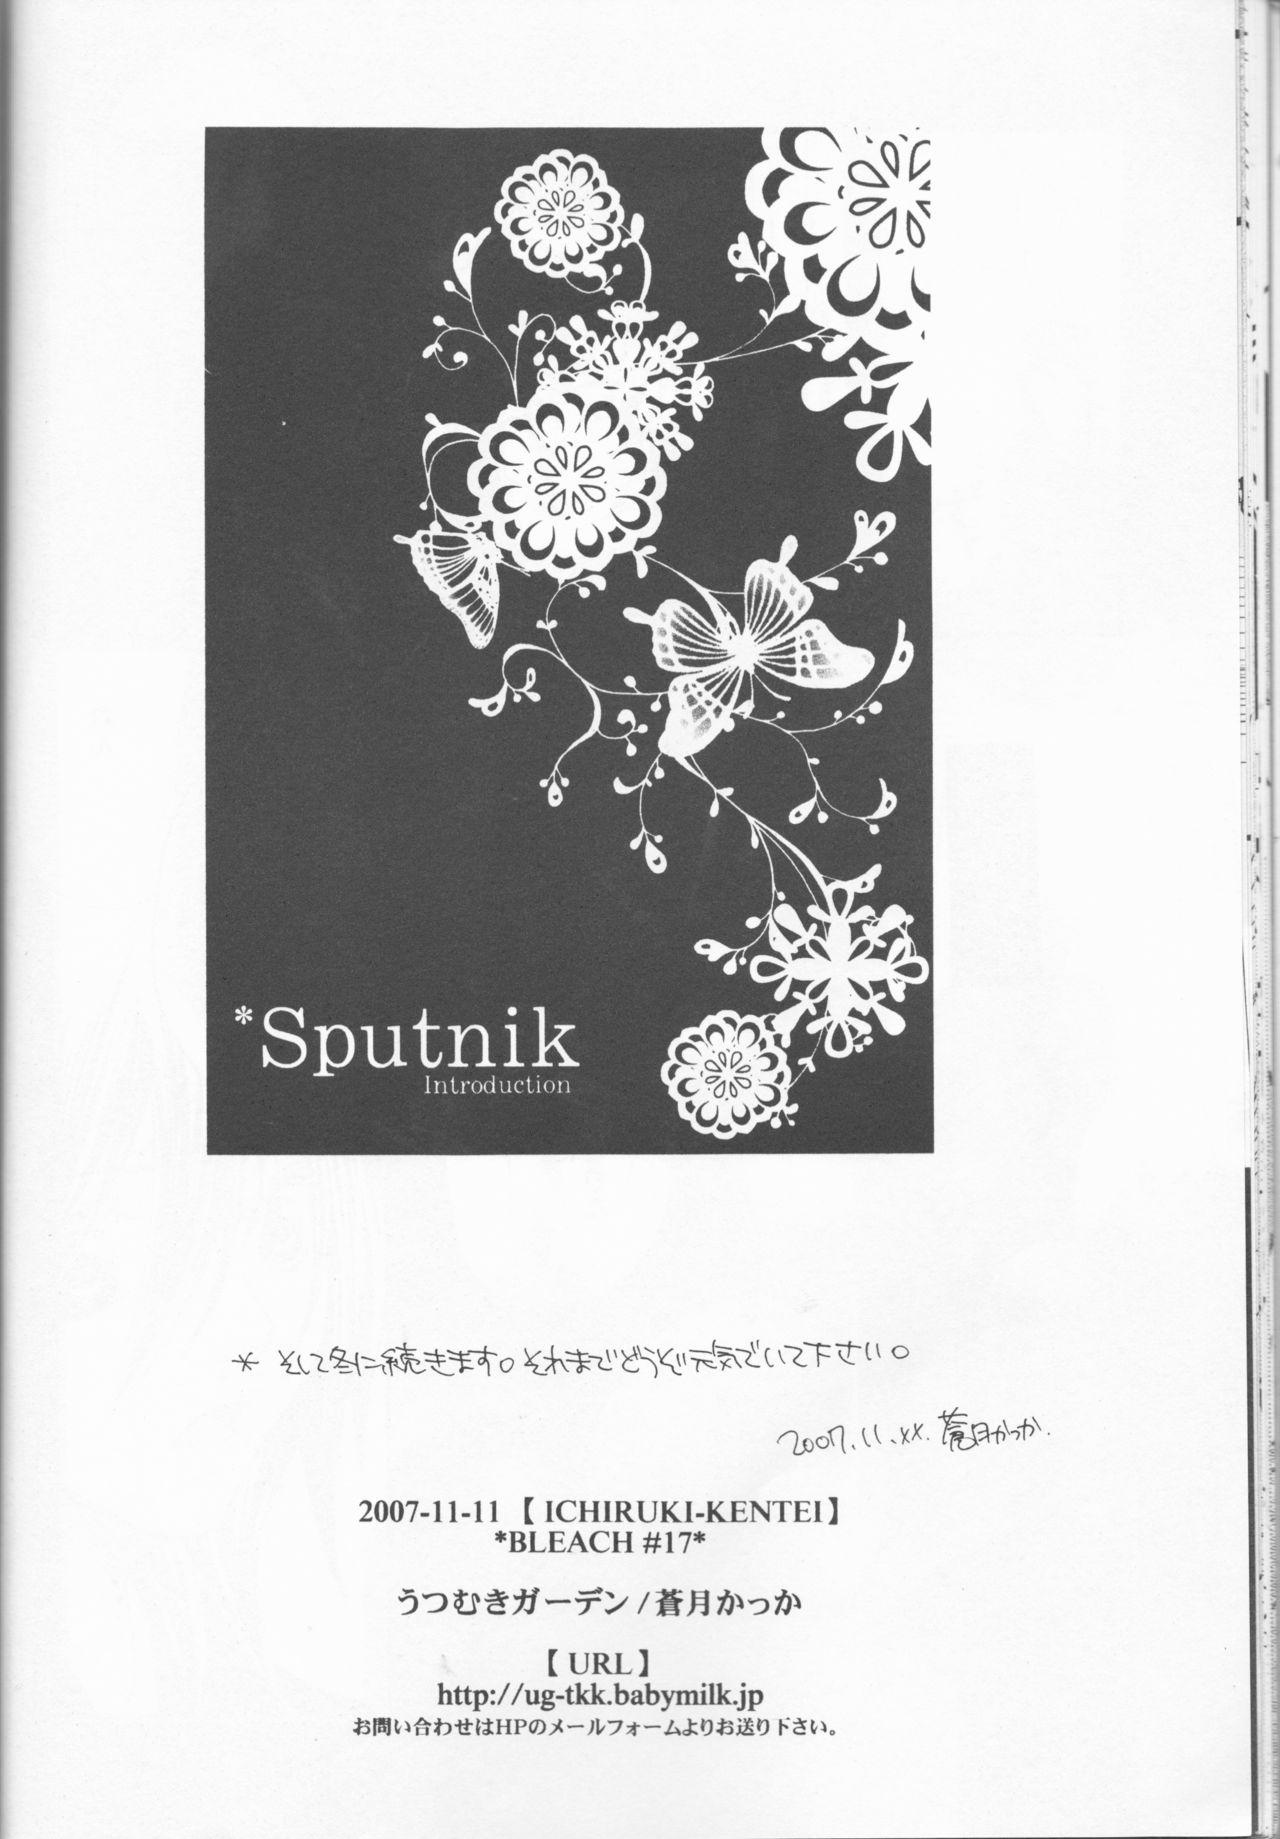 Sputnik Introduction 21